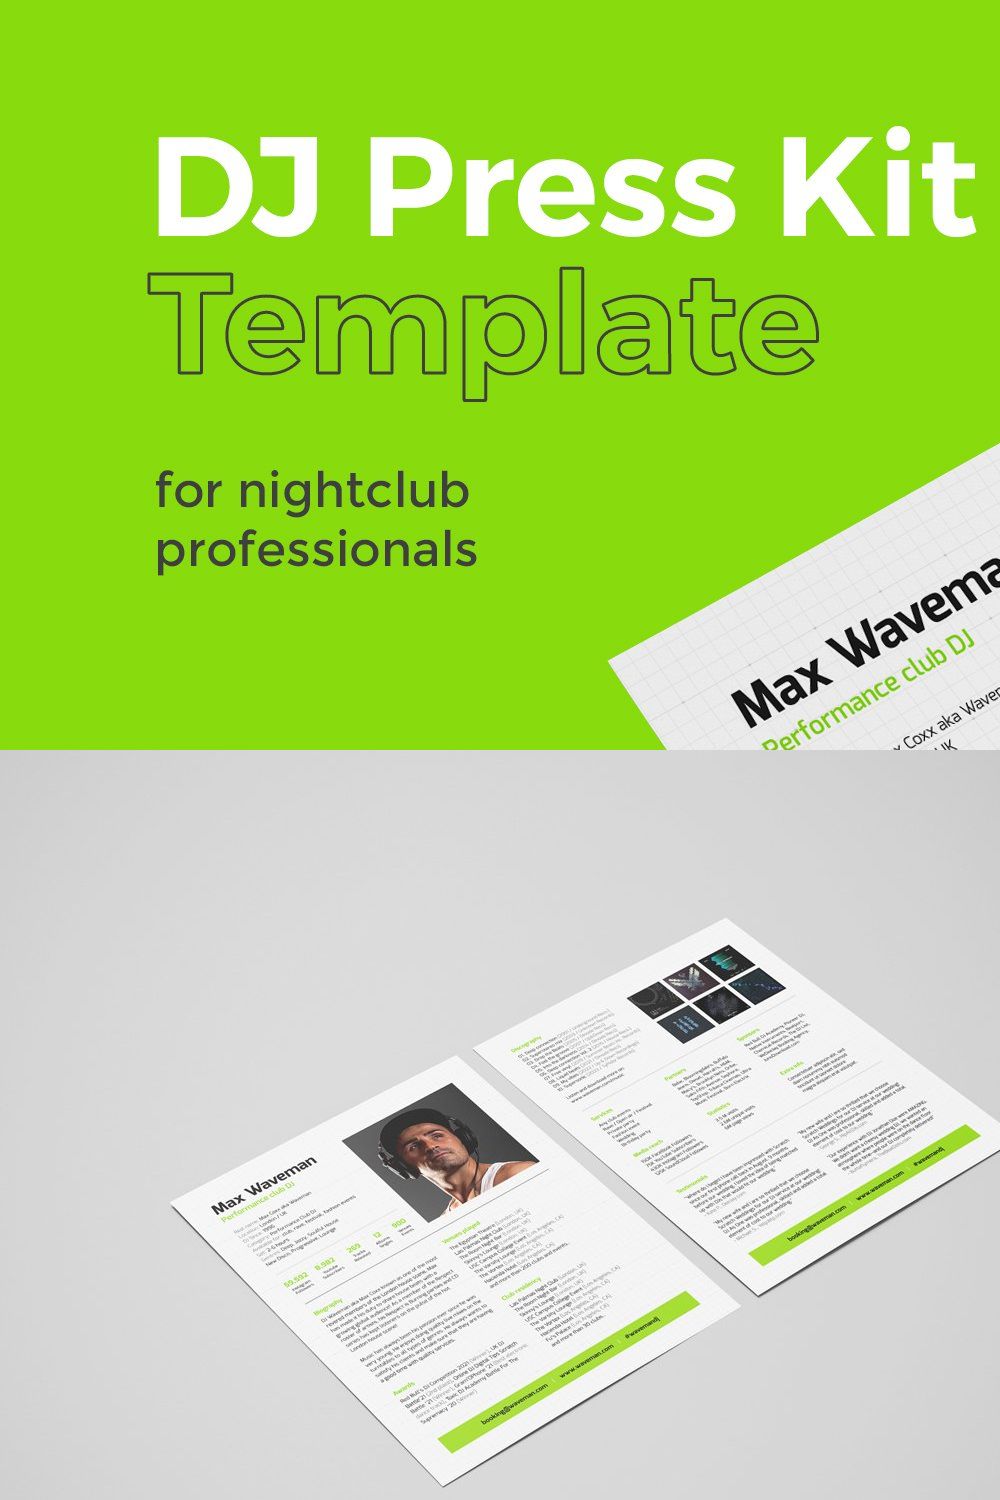 DJ Press Kit / Resume template pinterest preview image.